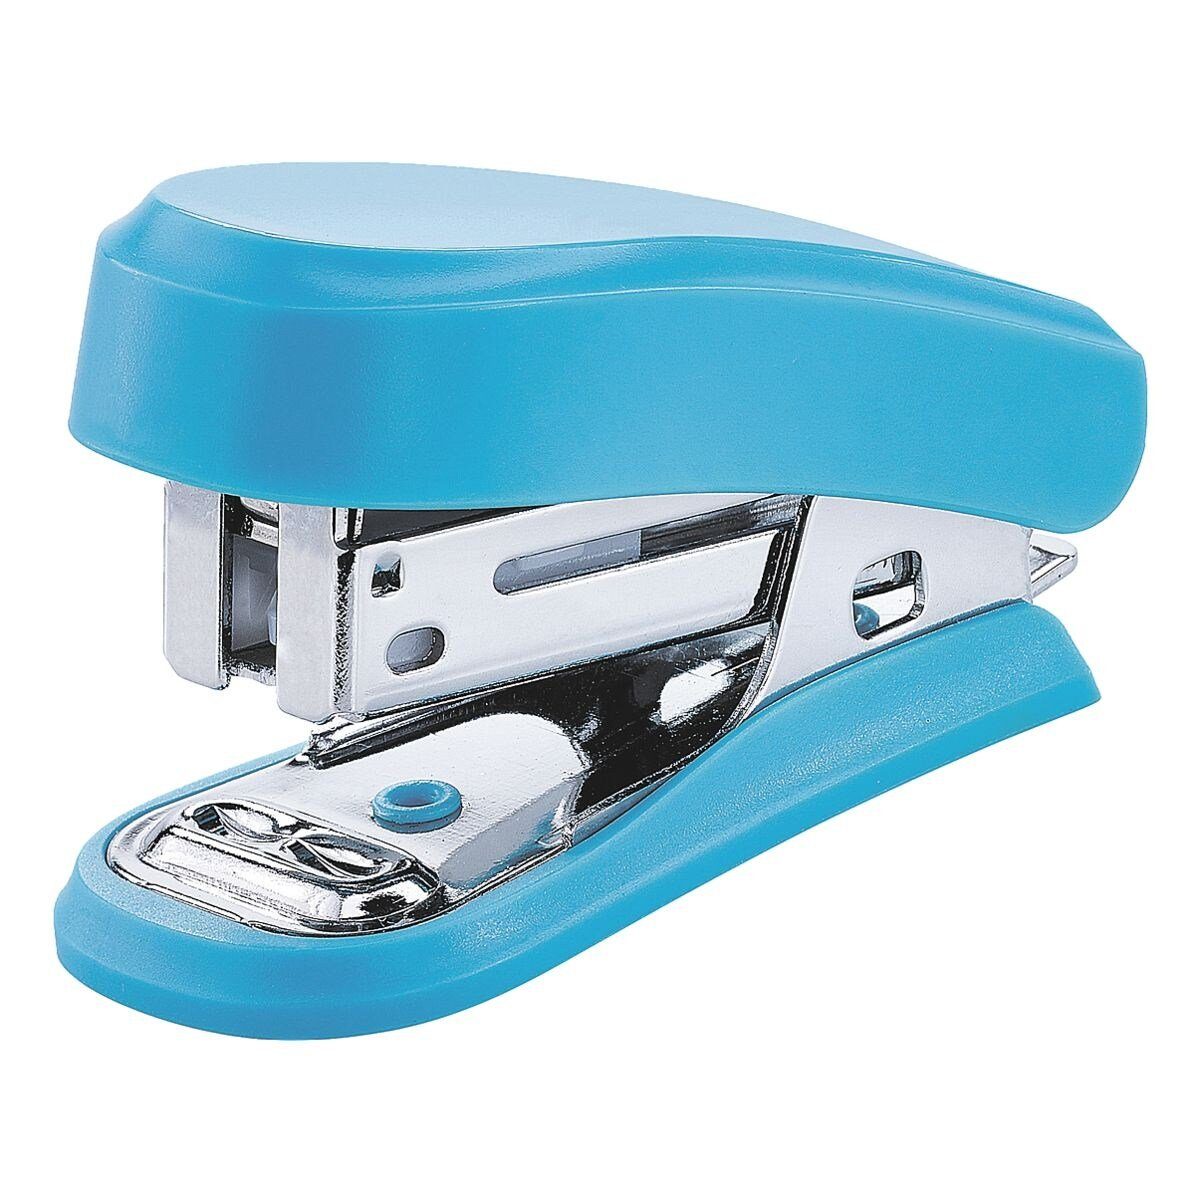 Klammerentferner blau Mini, integriertem Heftgerät NOVUS mit